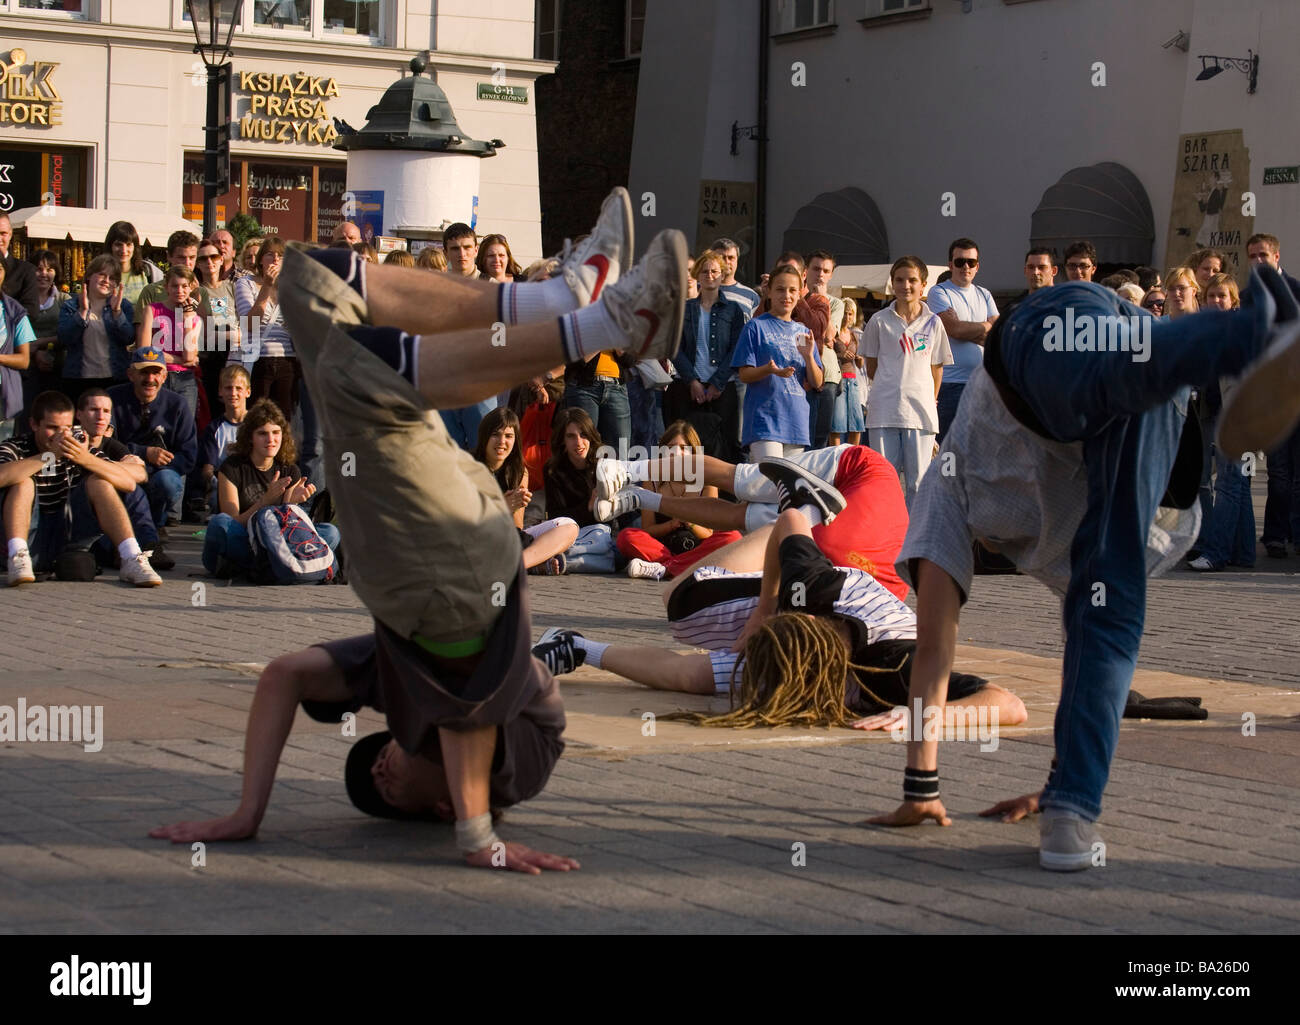 Street performance at Mian Market Square Krakow Poland Stock Photo